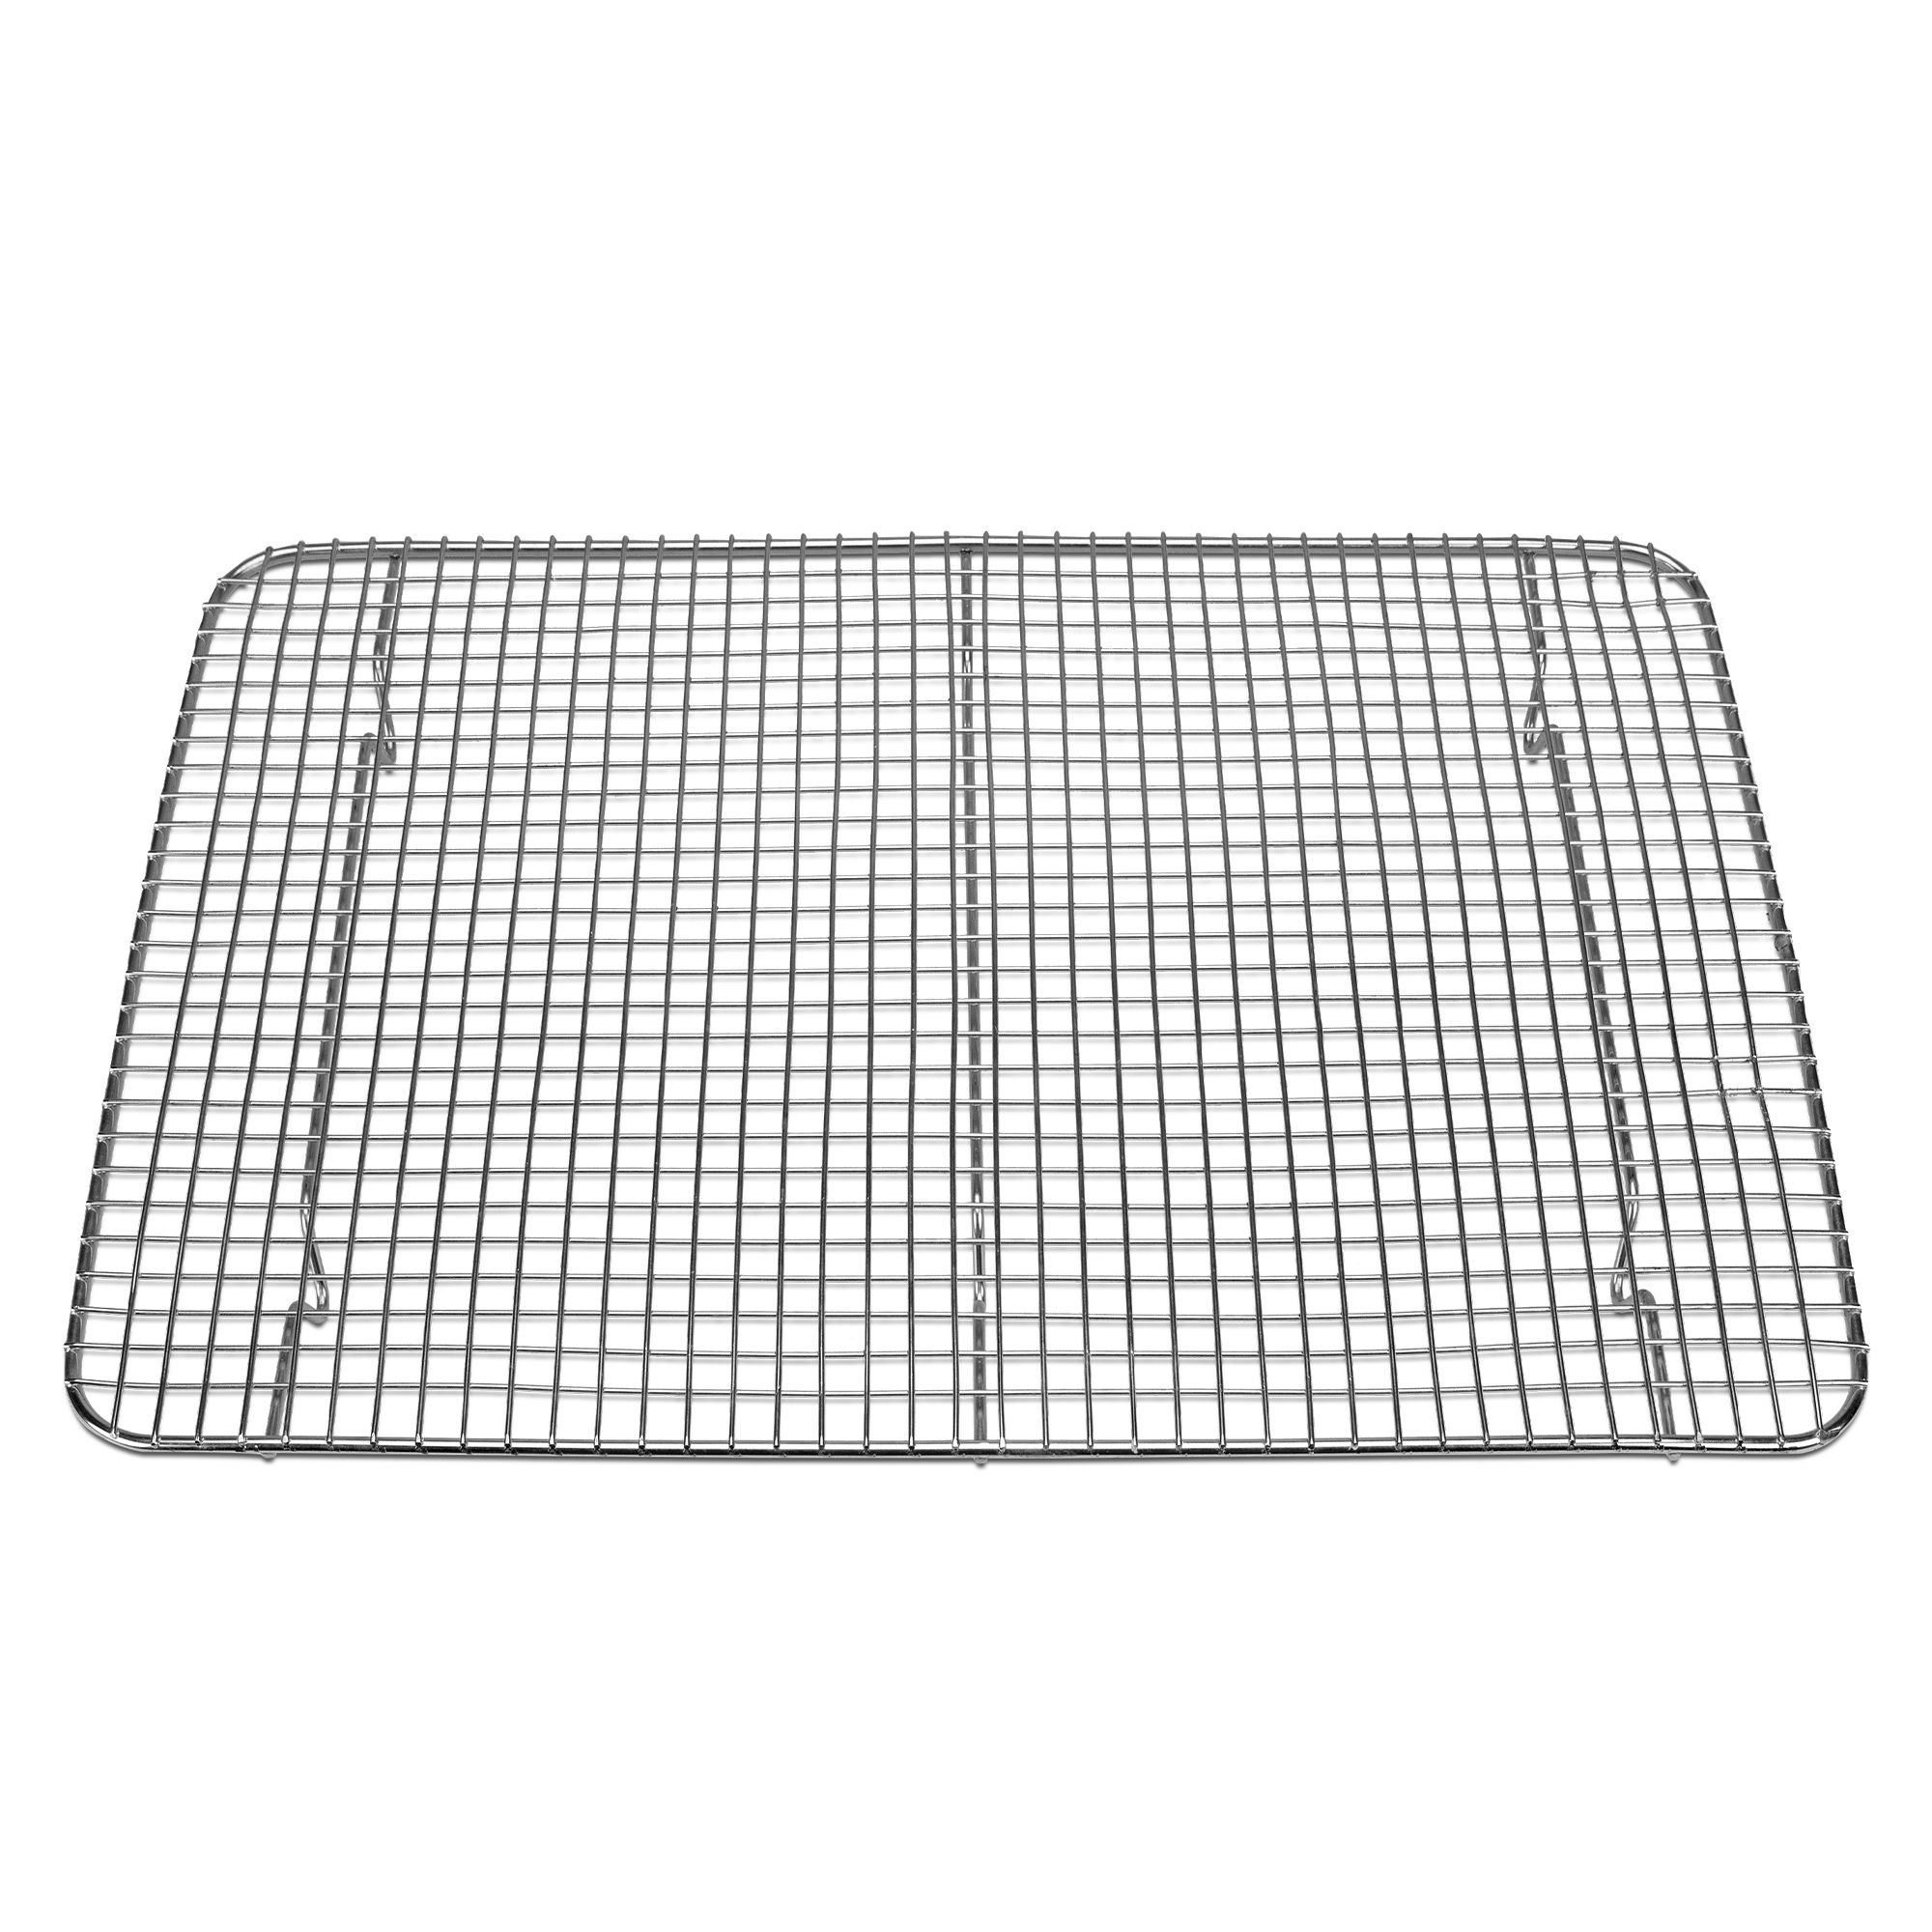 Städter - cooling grid rectangular - 42,5x29,5 cm